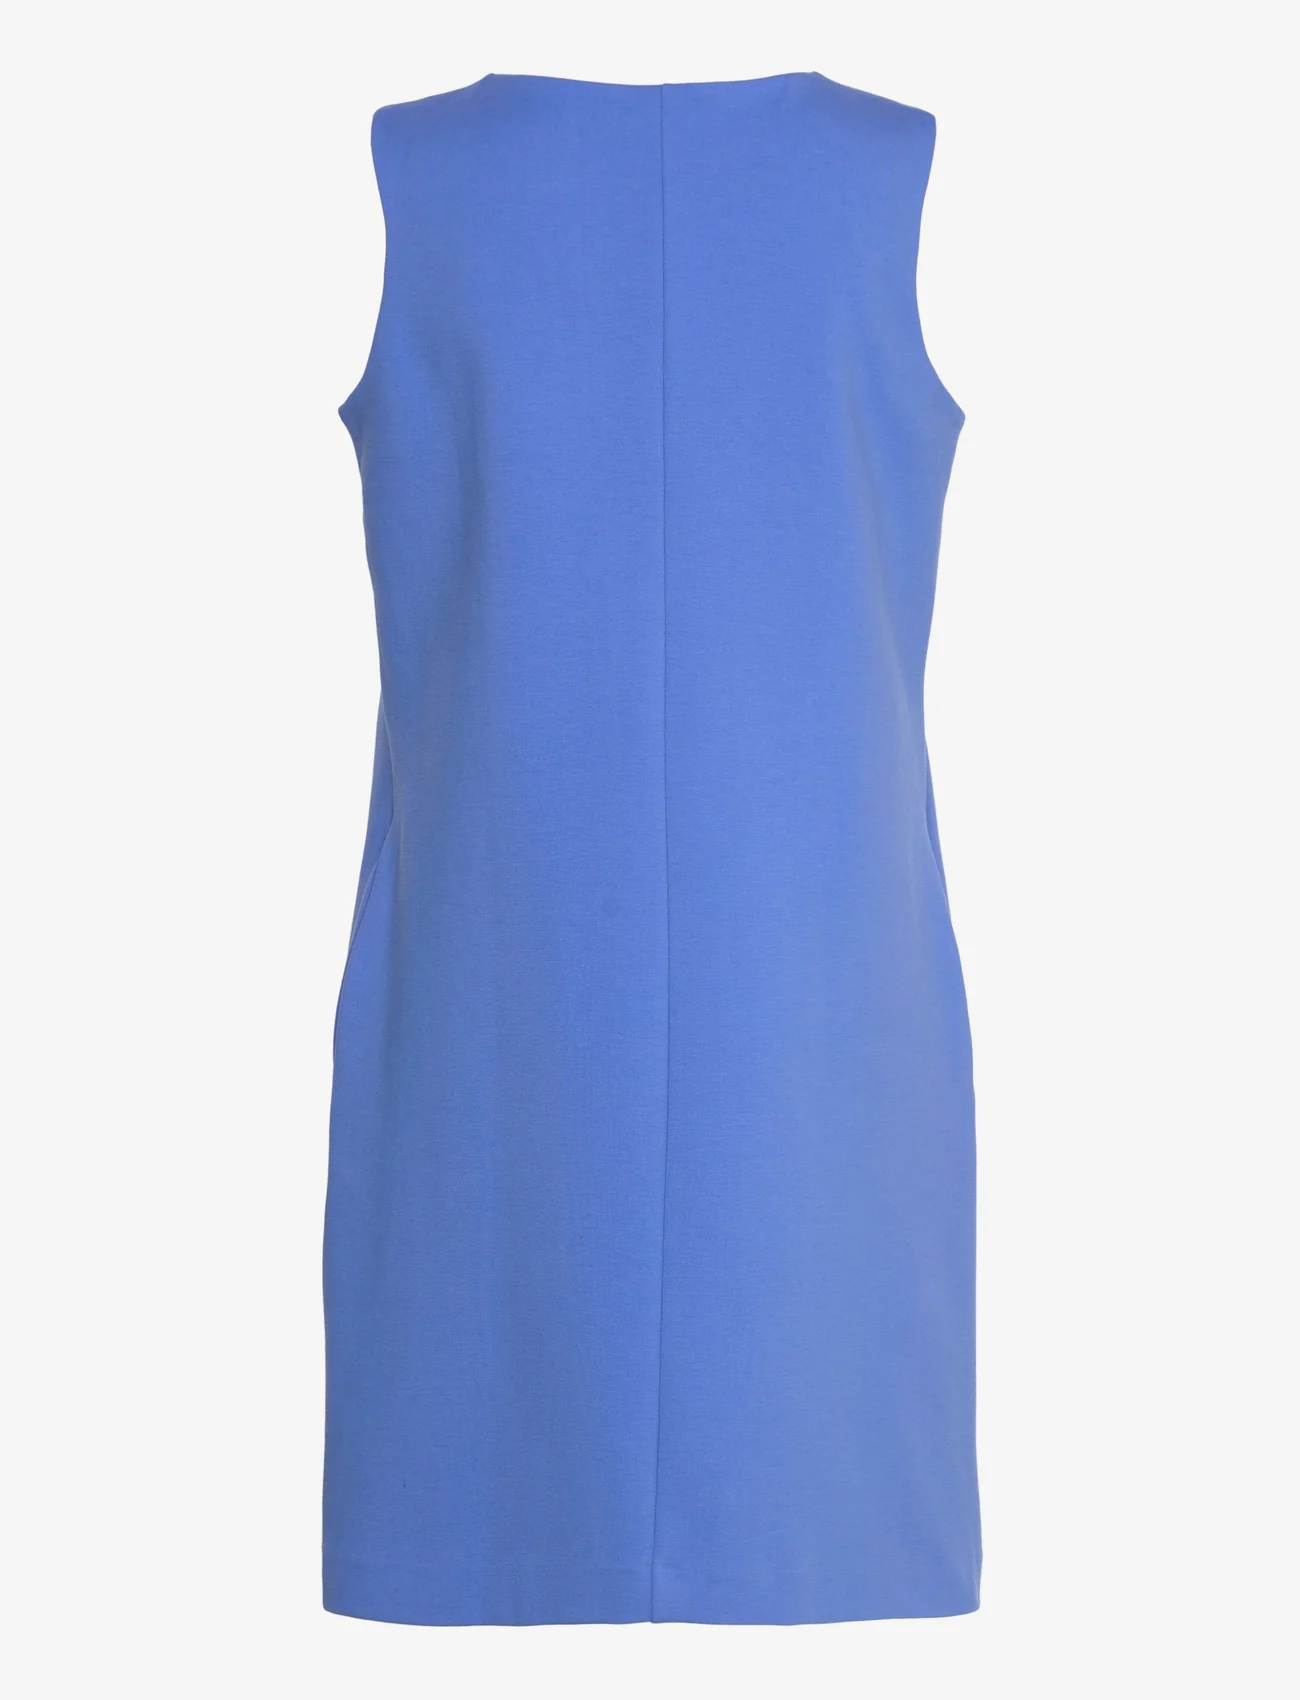 Papu - SLEEVELESS MIDI DRESS, Bright Blue - feestelijke kleding voor outlet-prijzen - blue - 1